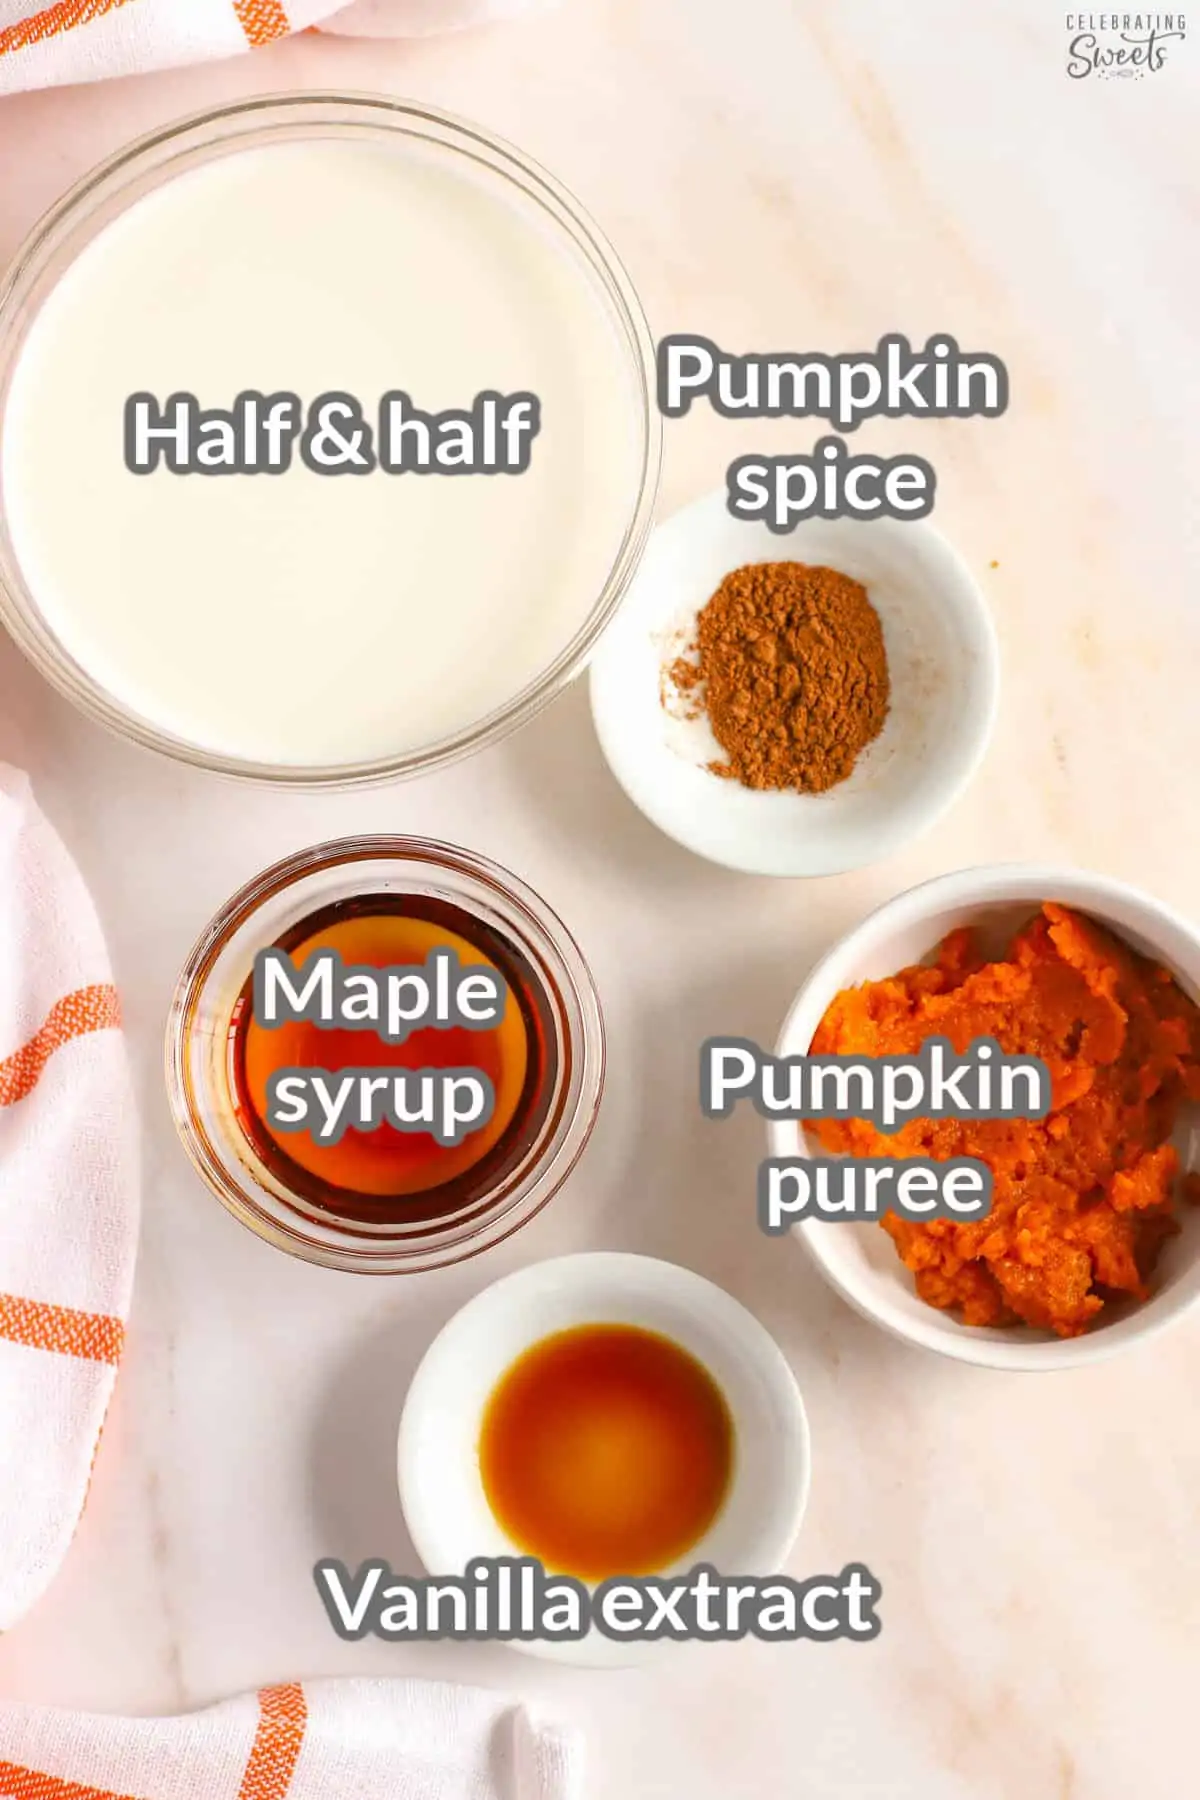 Pumpkin spice creamer ingredients: half and half, vanilla, pumpkin, spices, syrup.